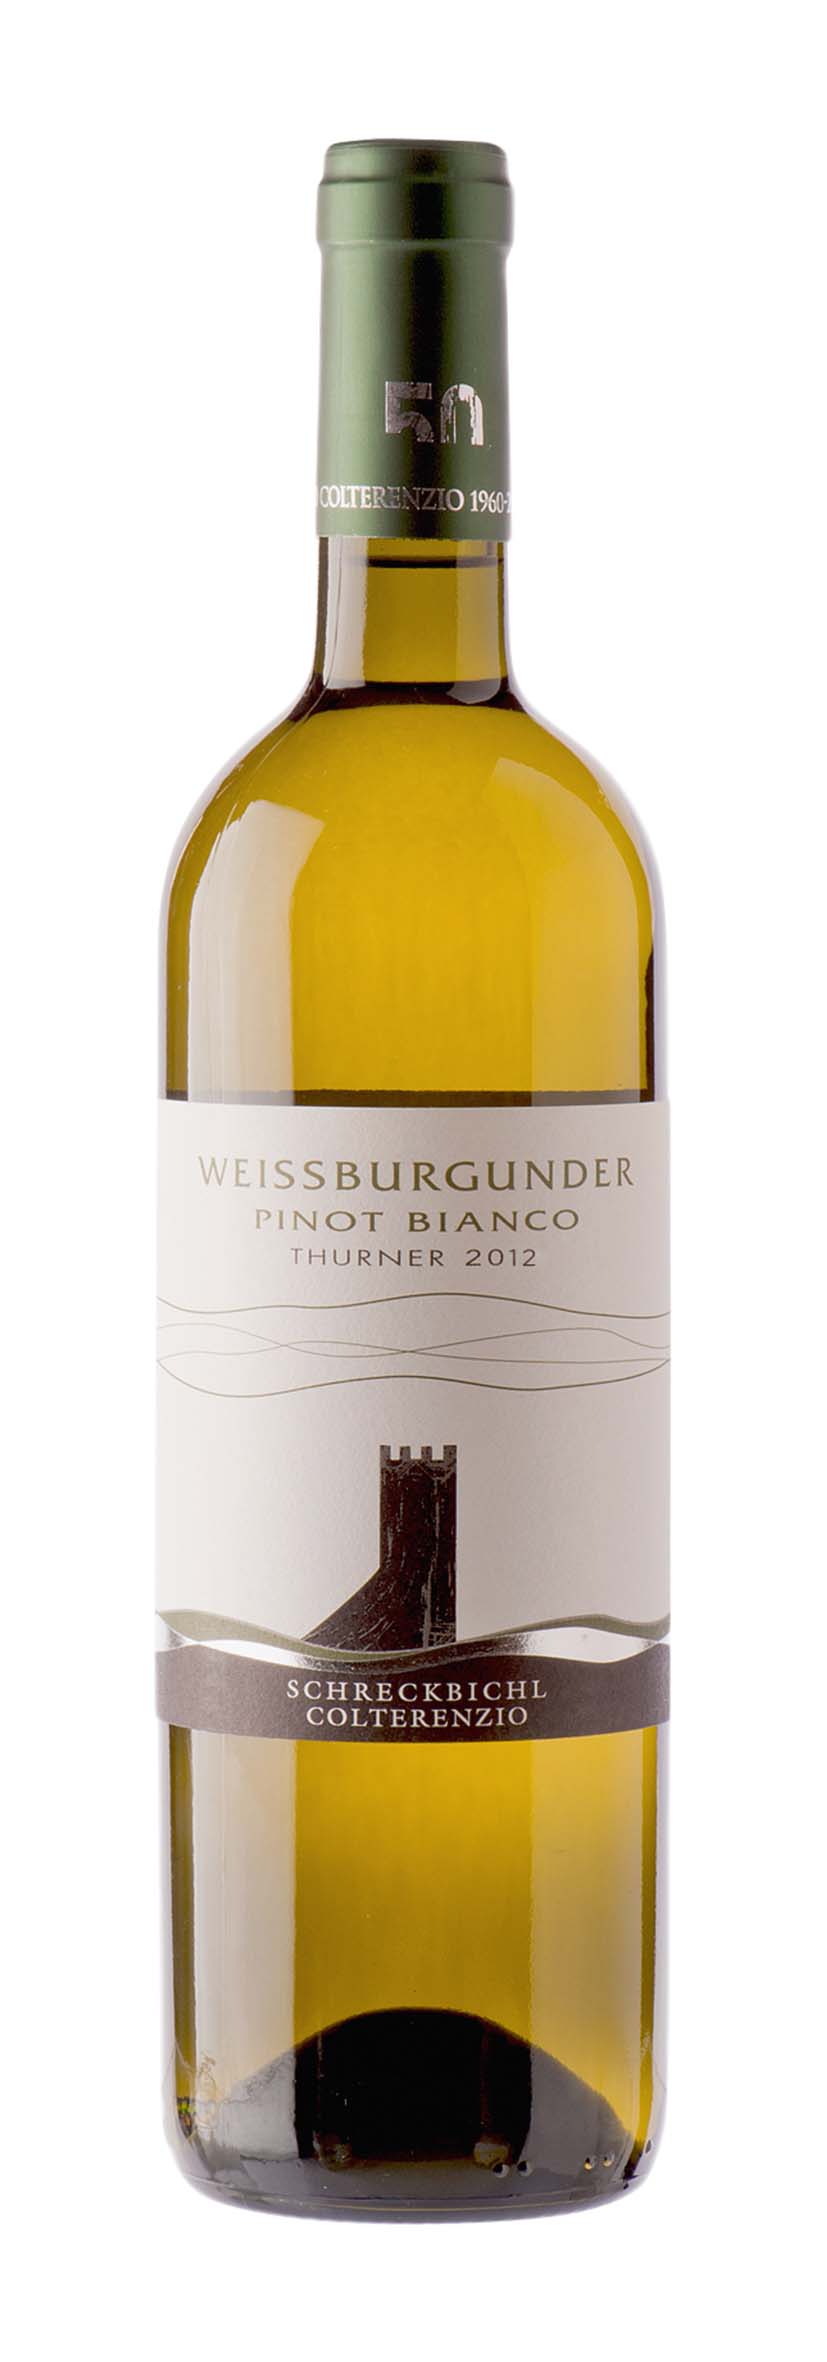 Südtirol DOC Weissburgunder Pinot Bianco Thurner 2012